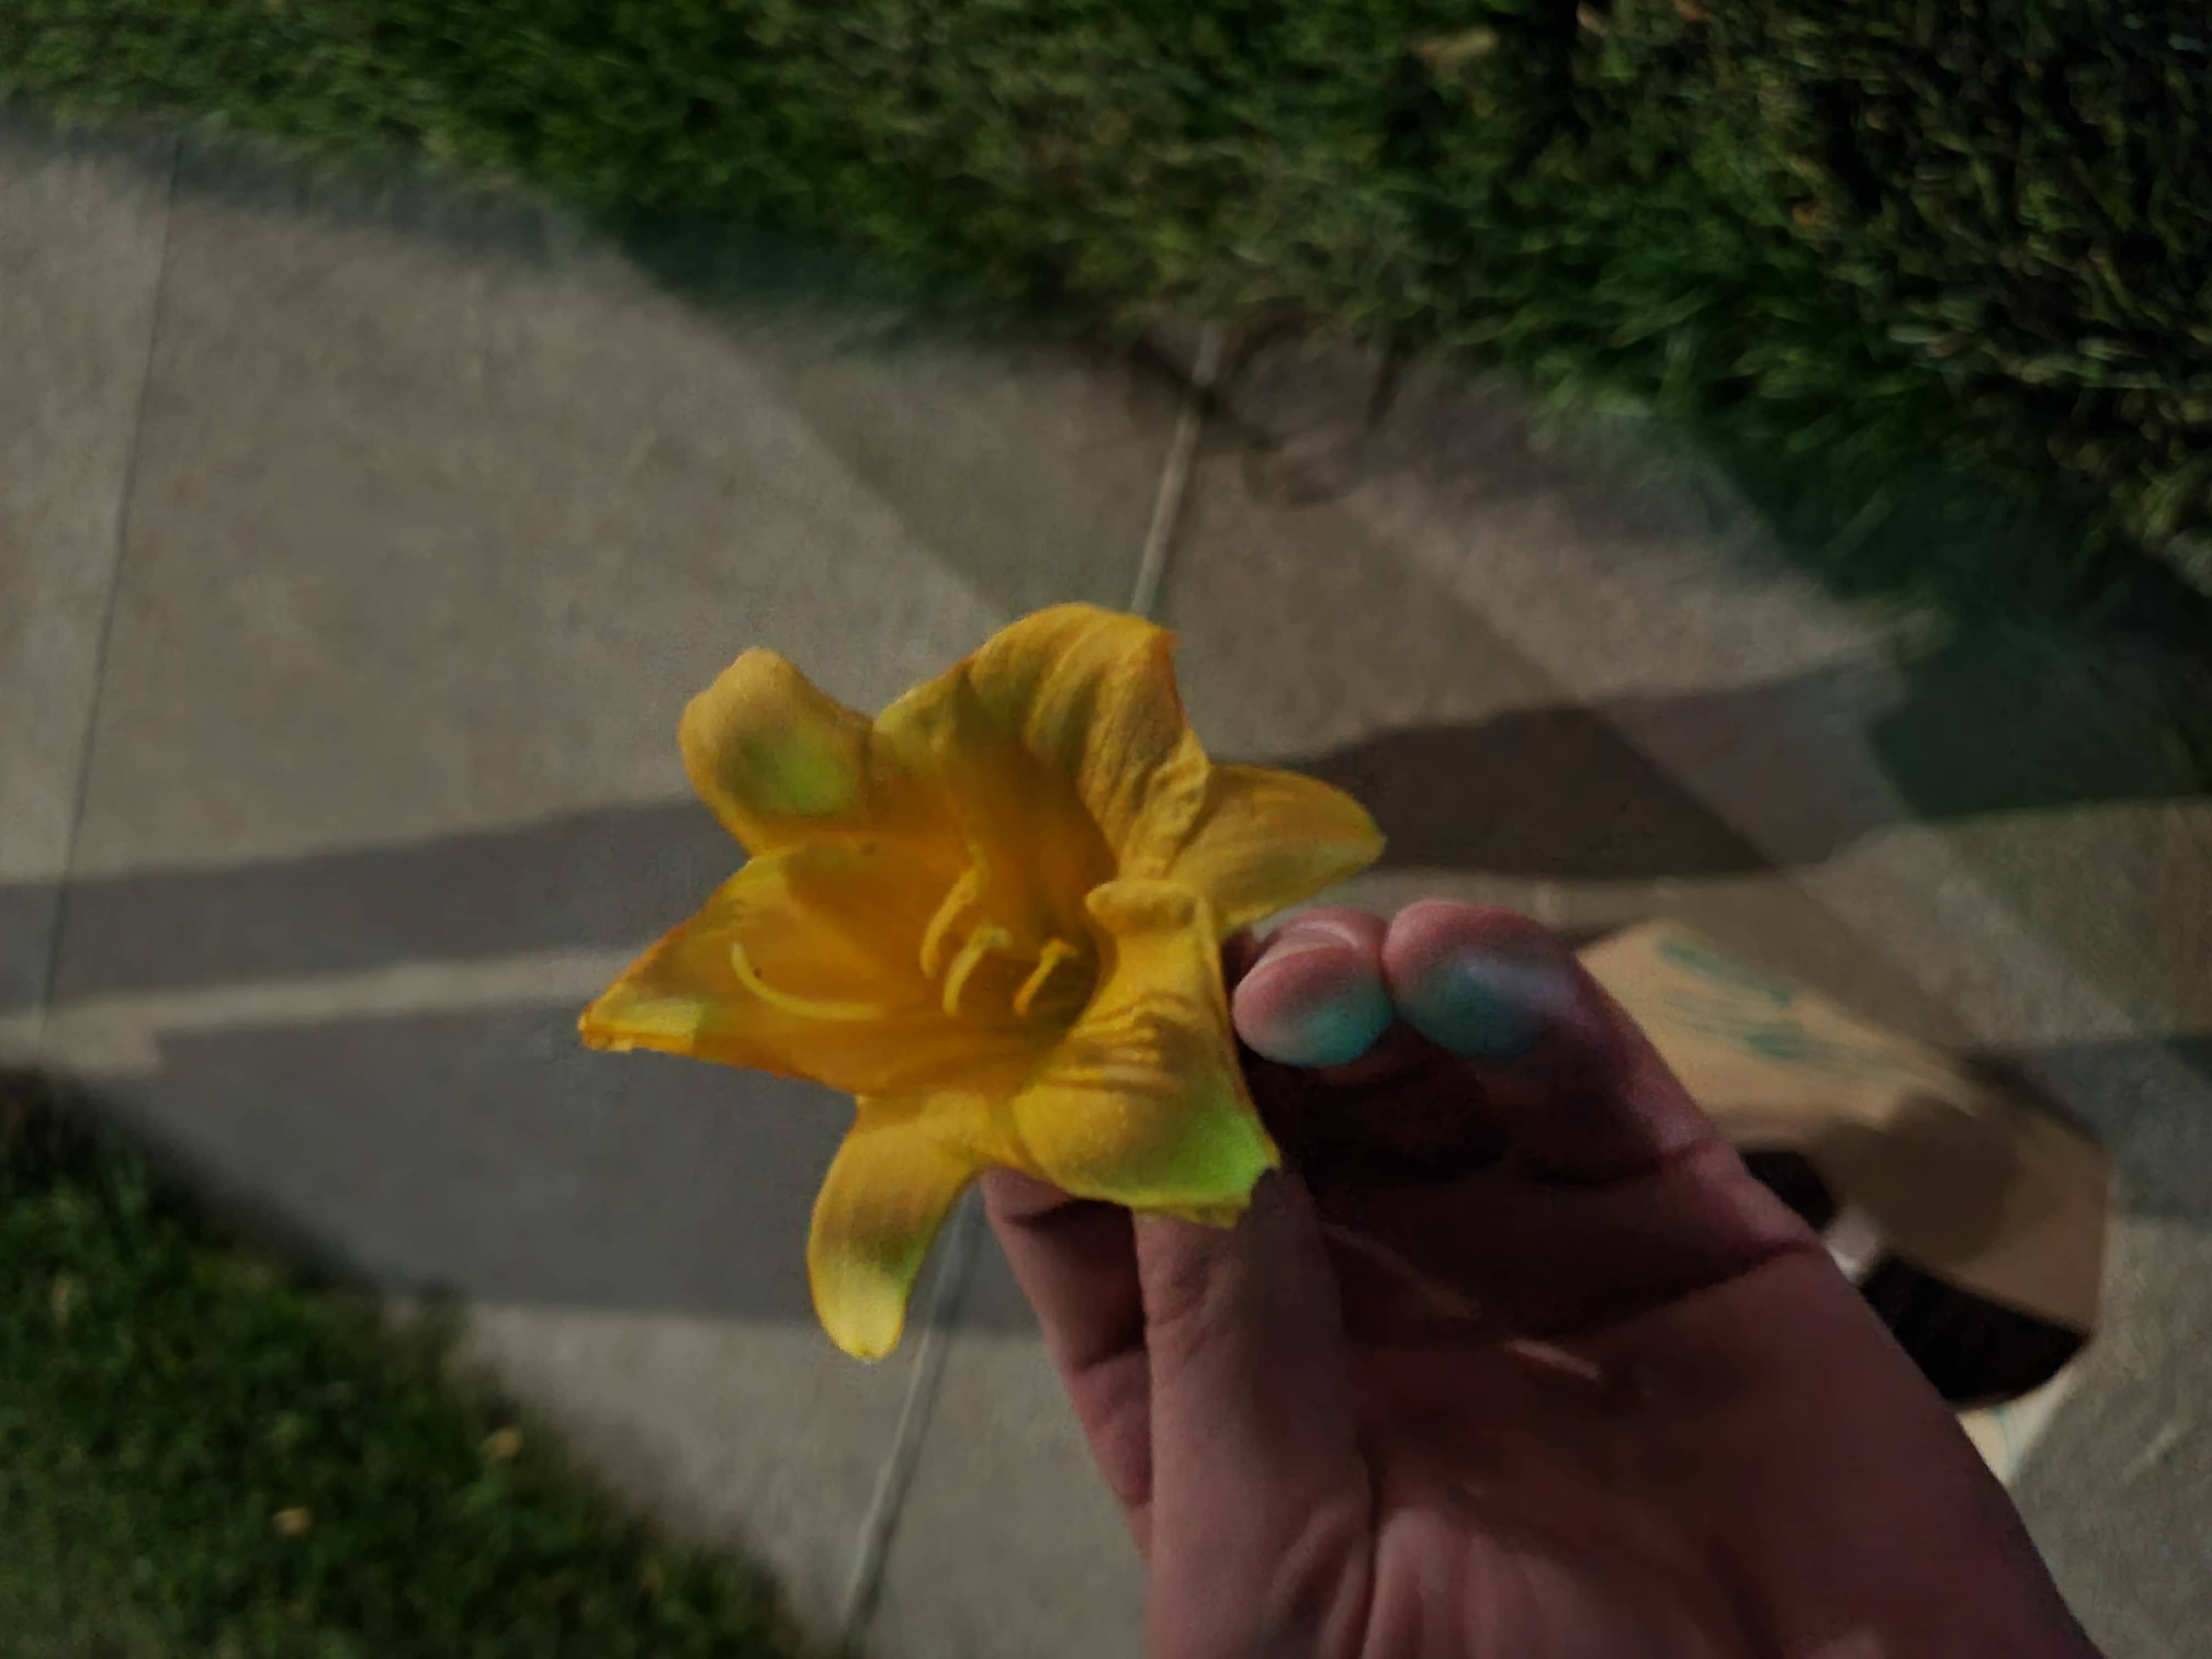 The last flower of summer